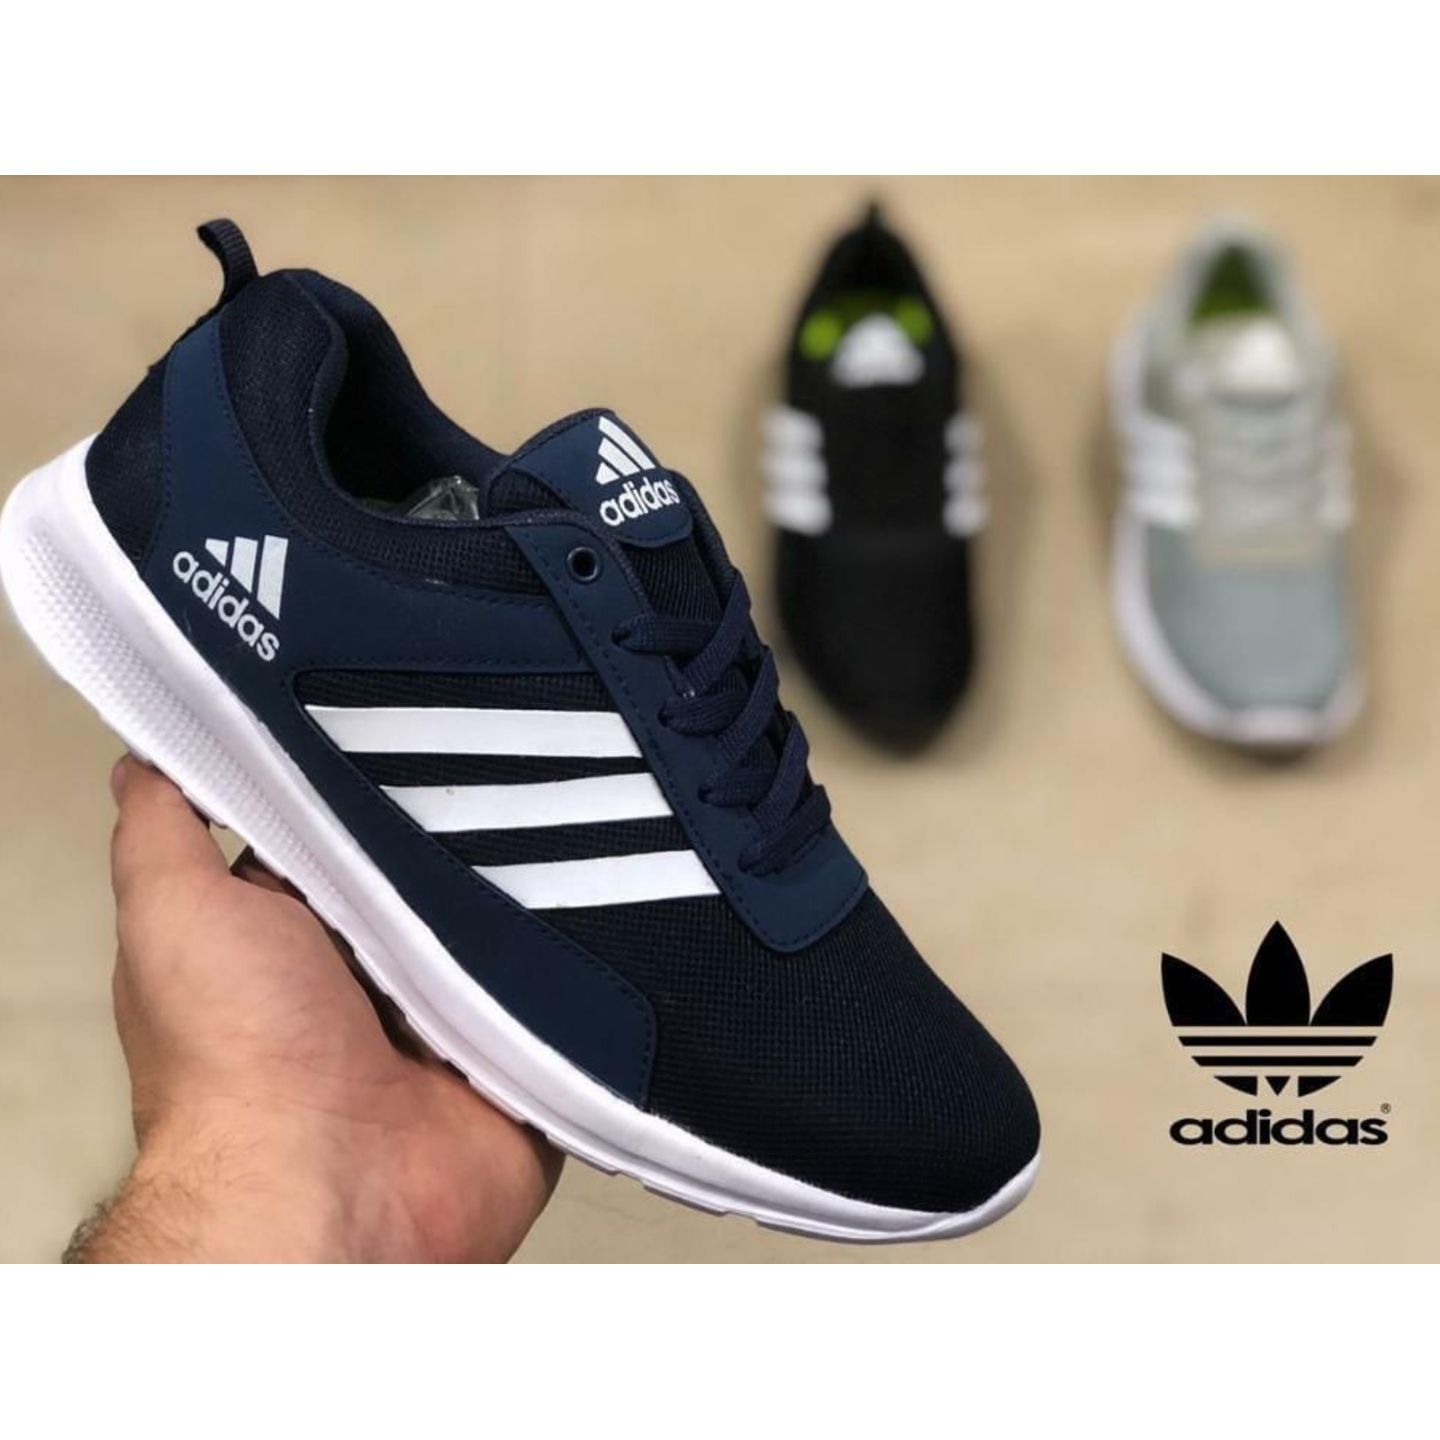 Black Adidas Mens Shoes Shop Online